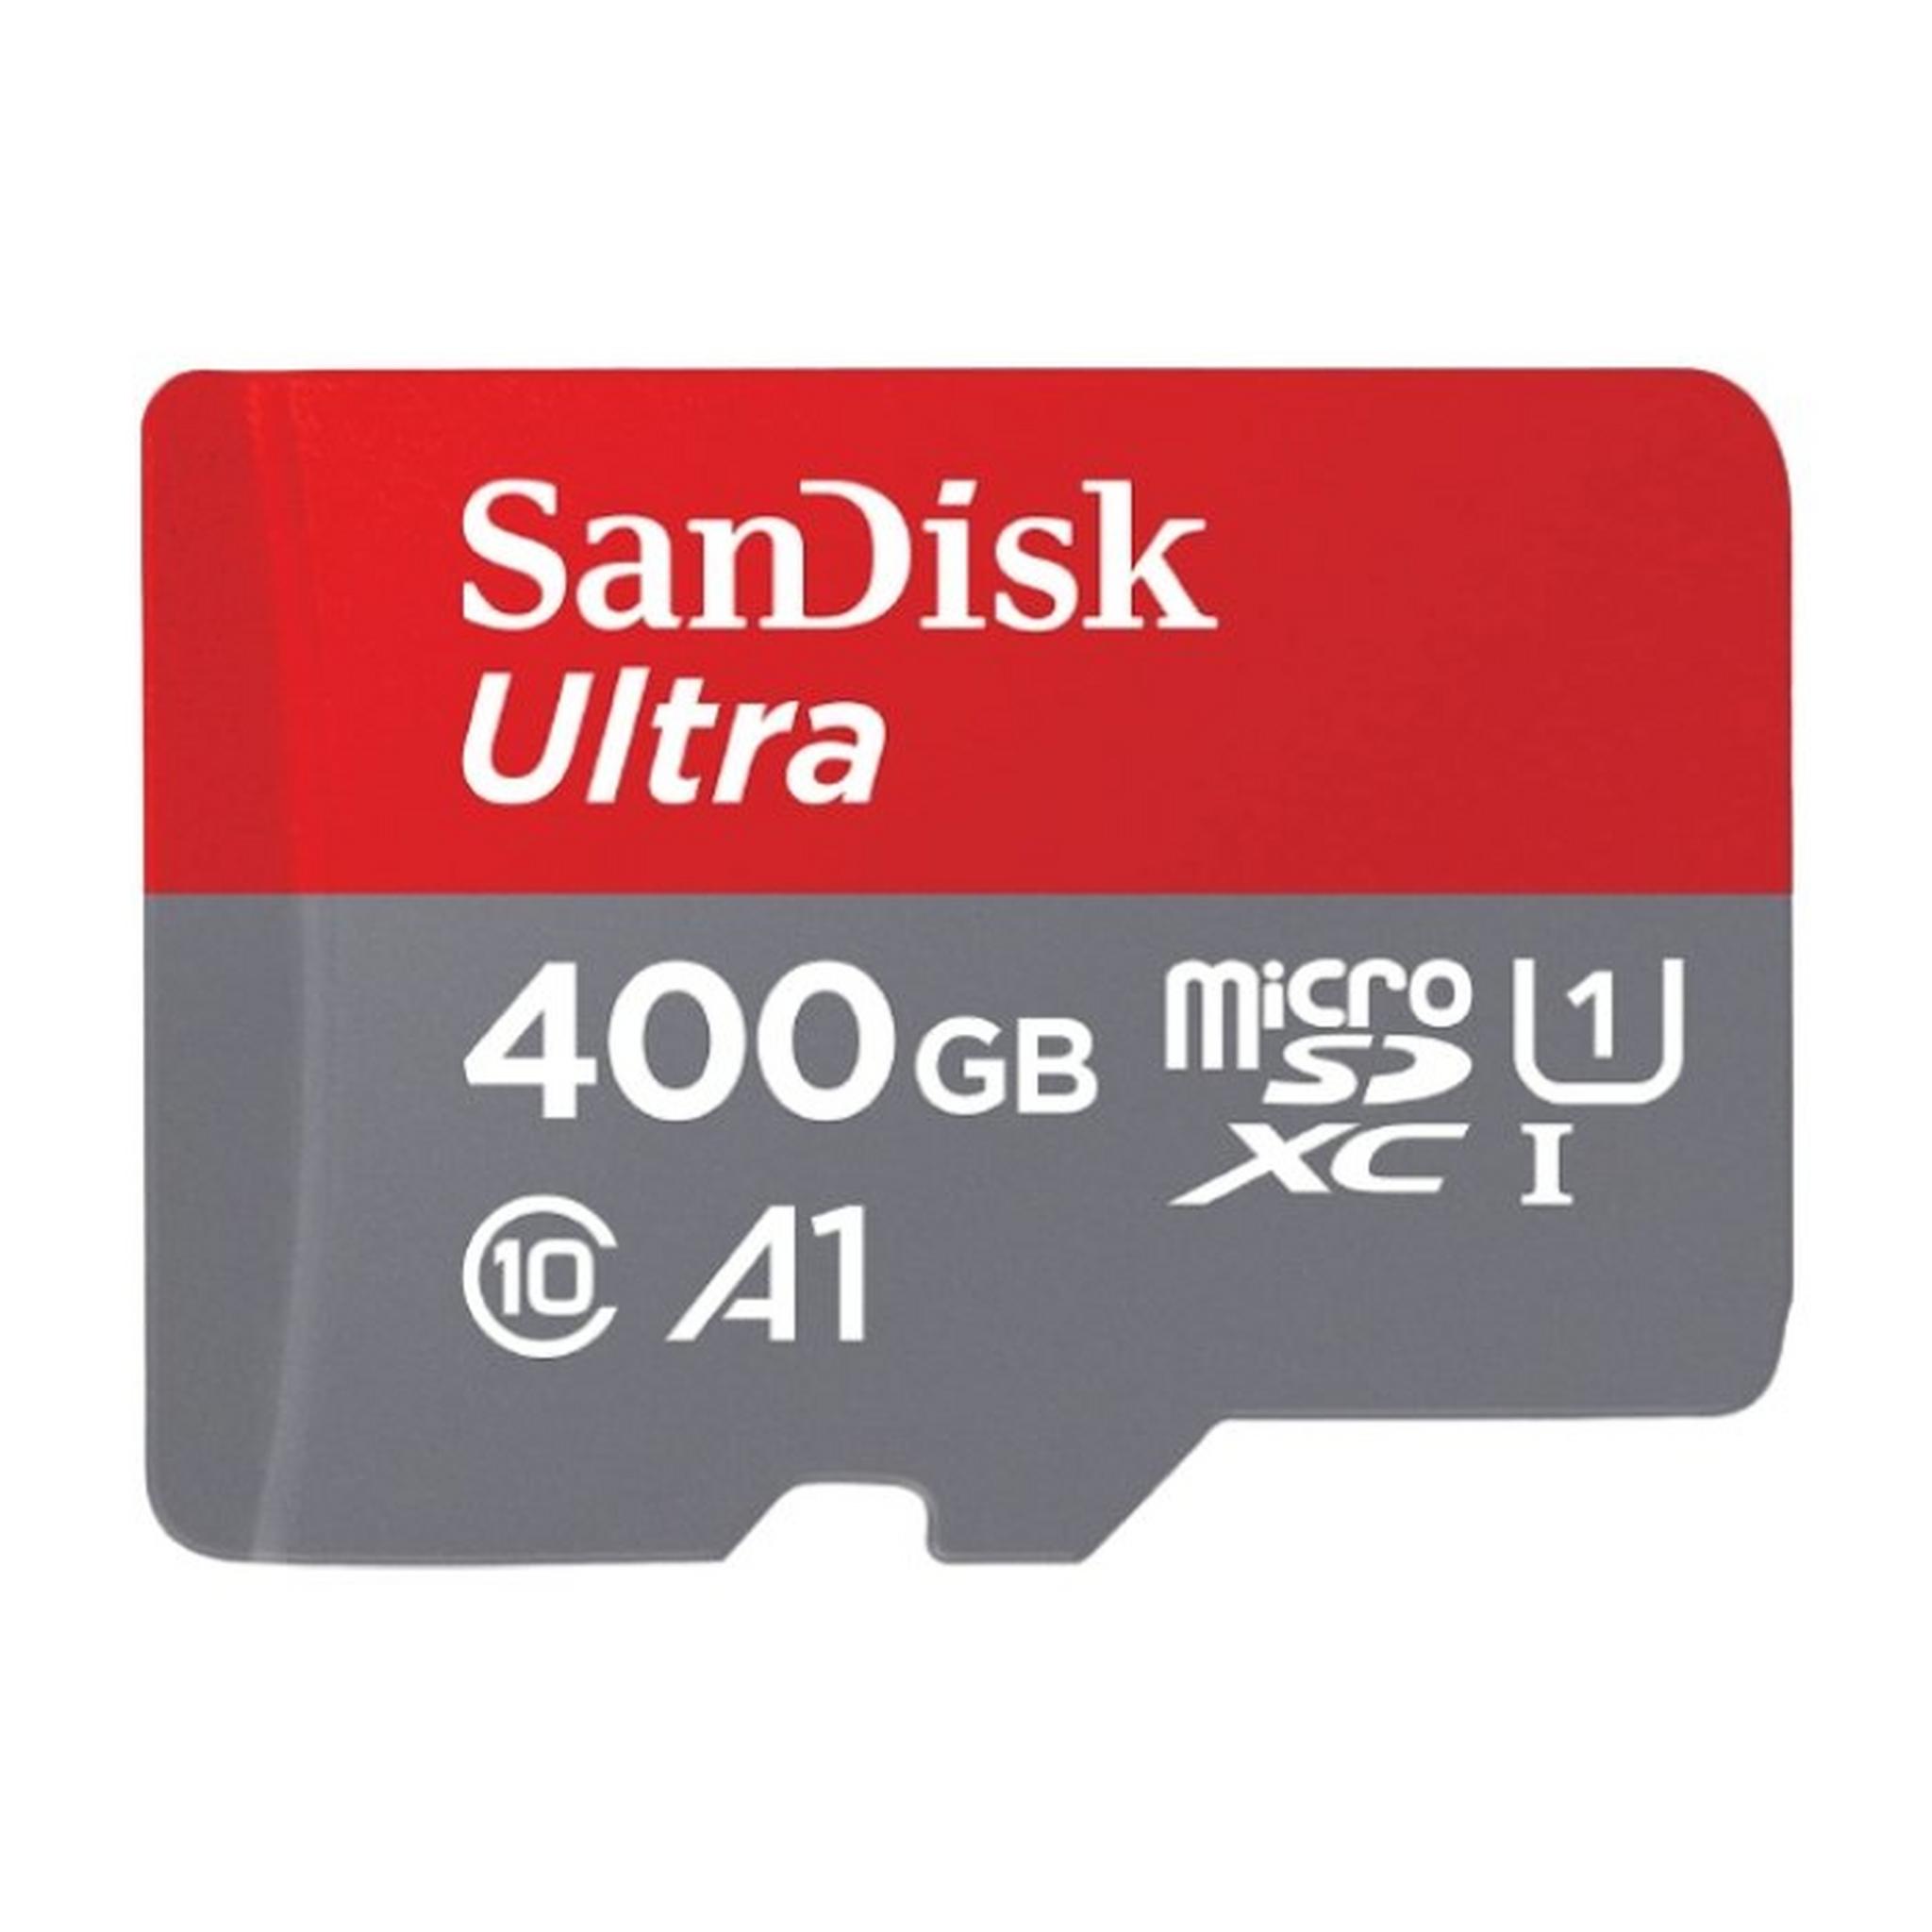 SanDisk Ultra MicroSDXC 400GB UHS-I 120MB/S Memory Card